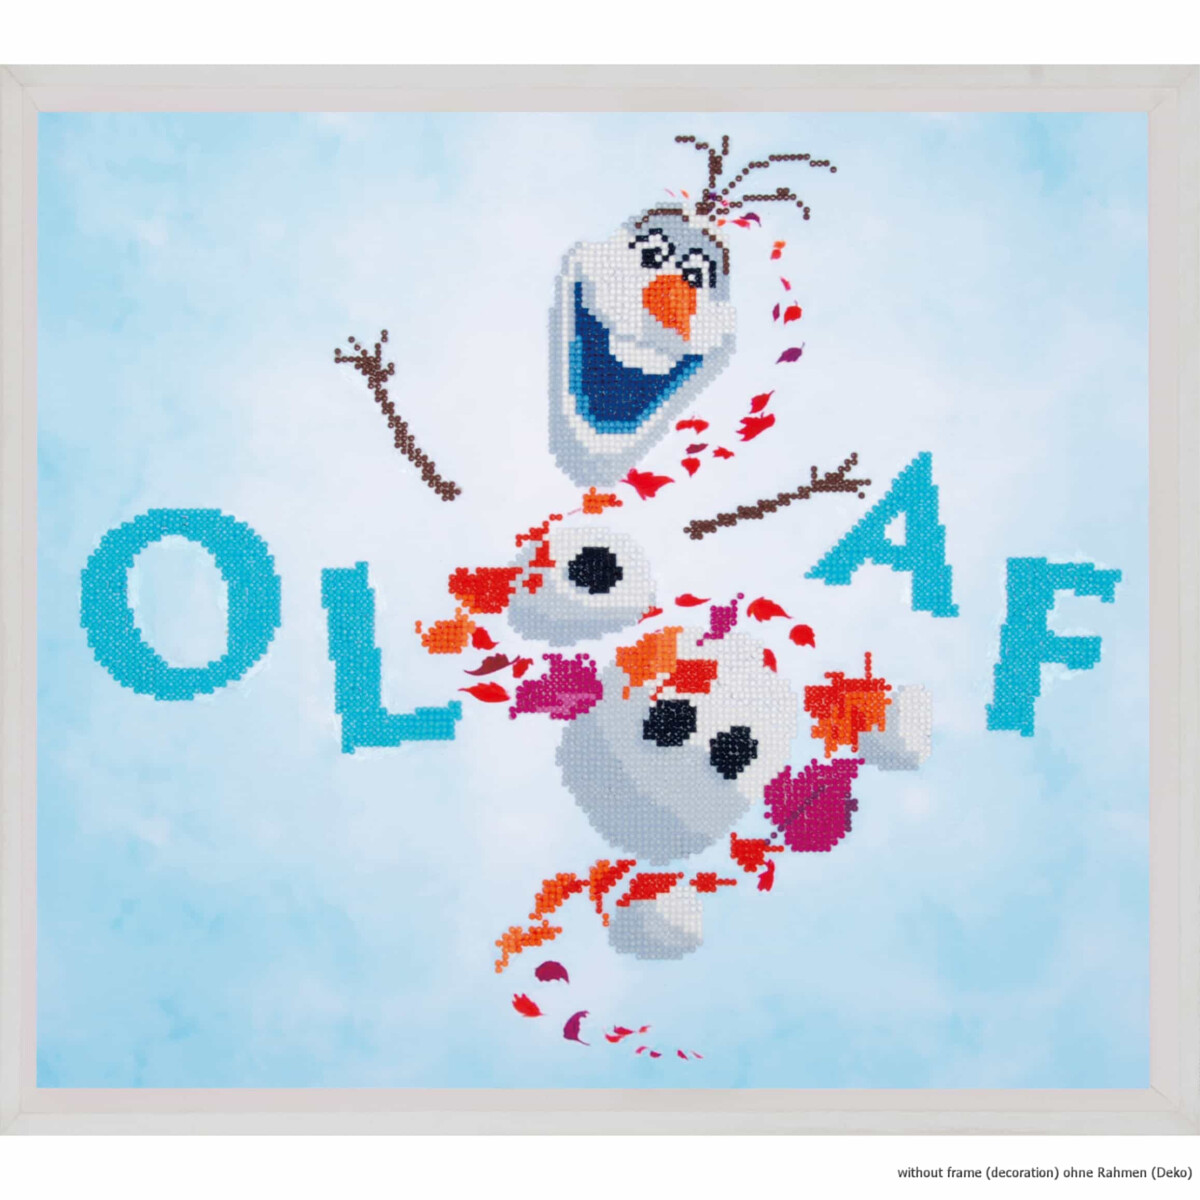 Vervaco Peinture sur diamant Disney Frozen 2 Olaf (en anglais), € 43,09